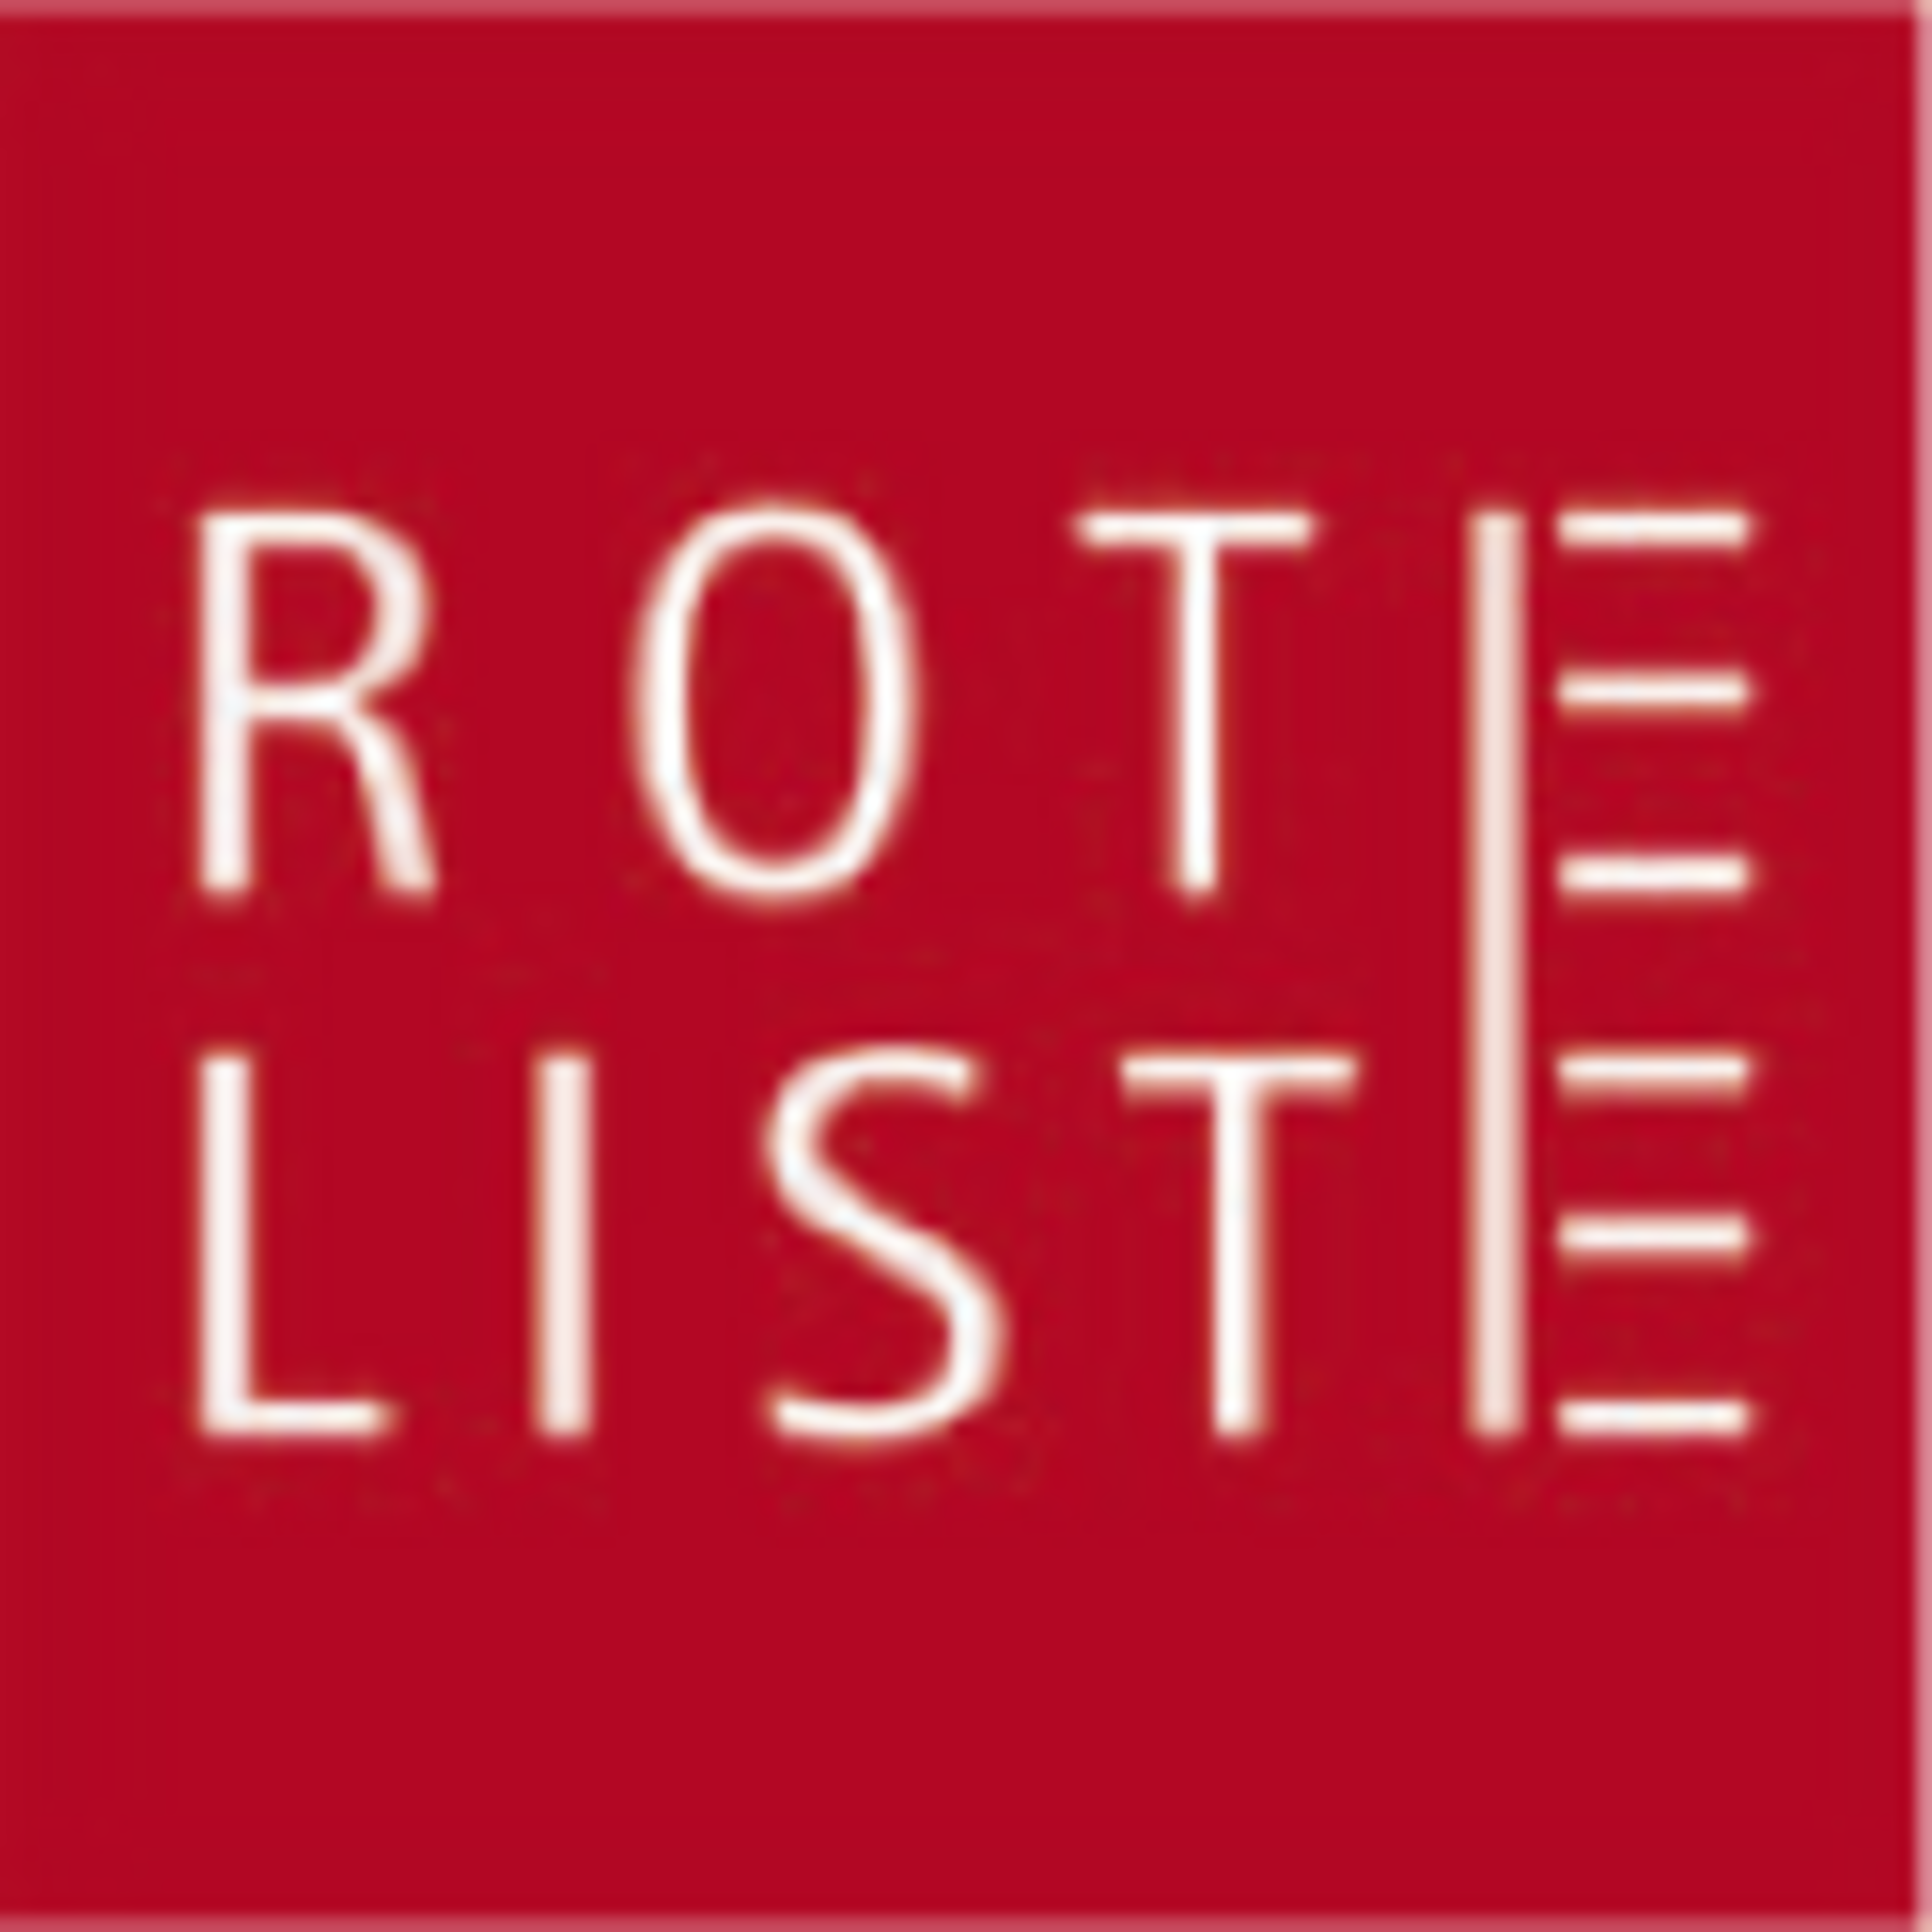 Rote Liste® Logo